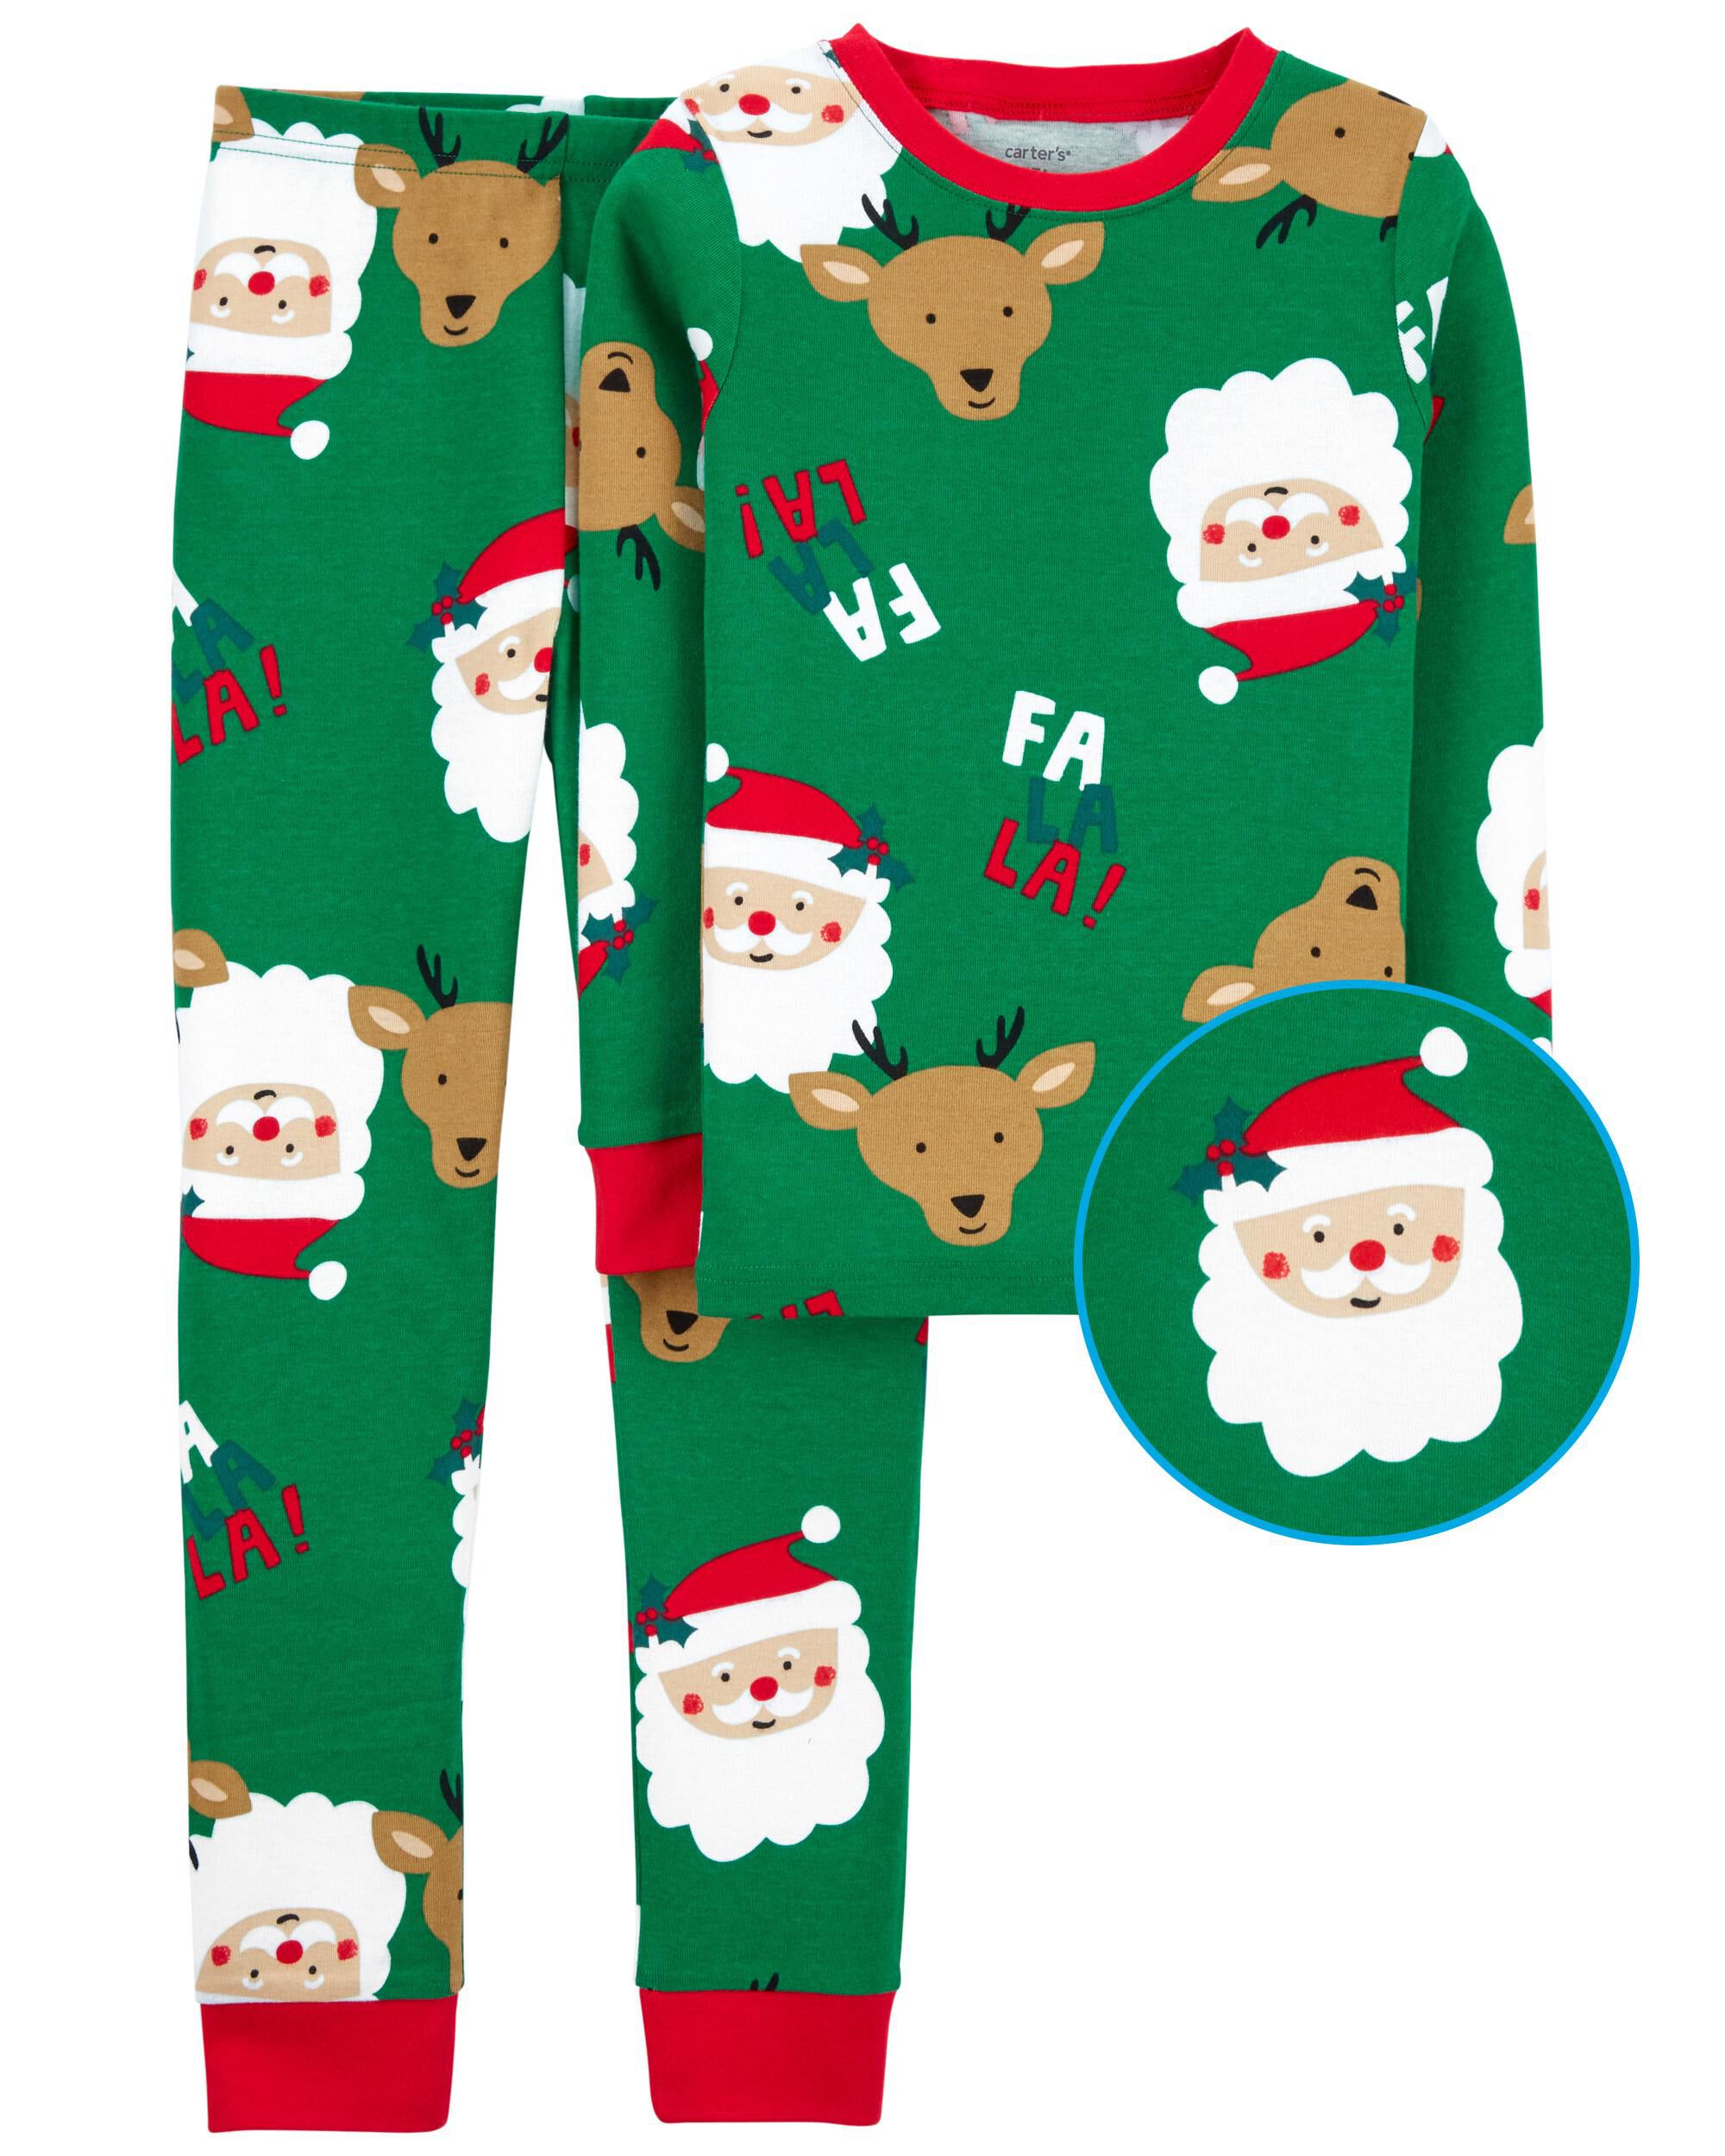 4P Carters Infant & Toddler Girls Santa's Nice List Christmas Holiday Pajamas 3T 